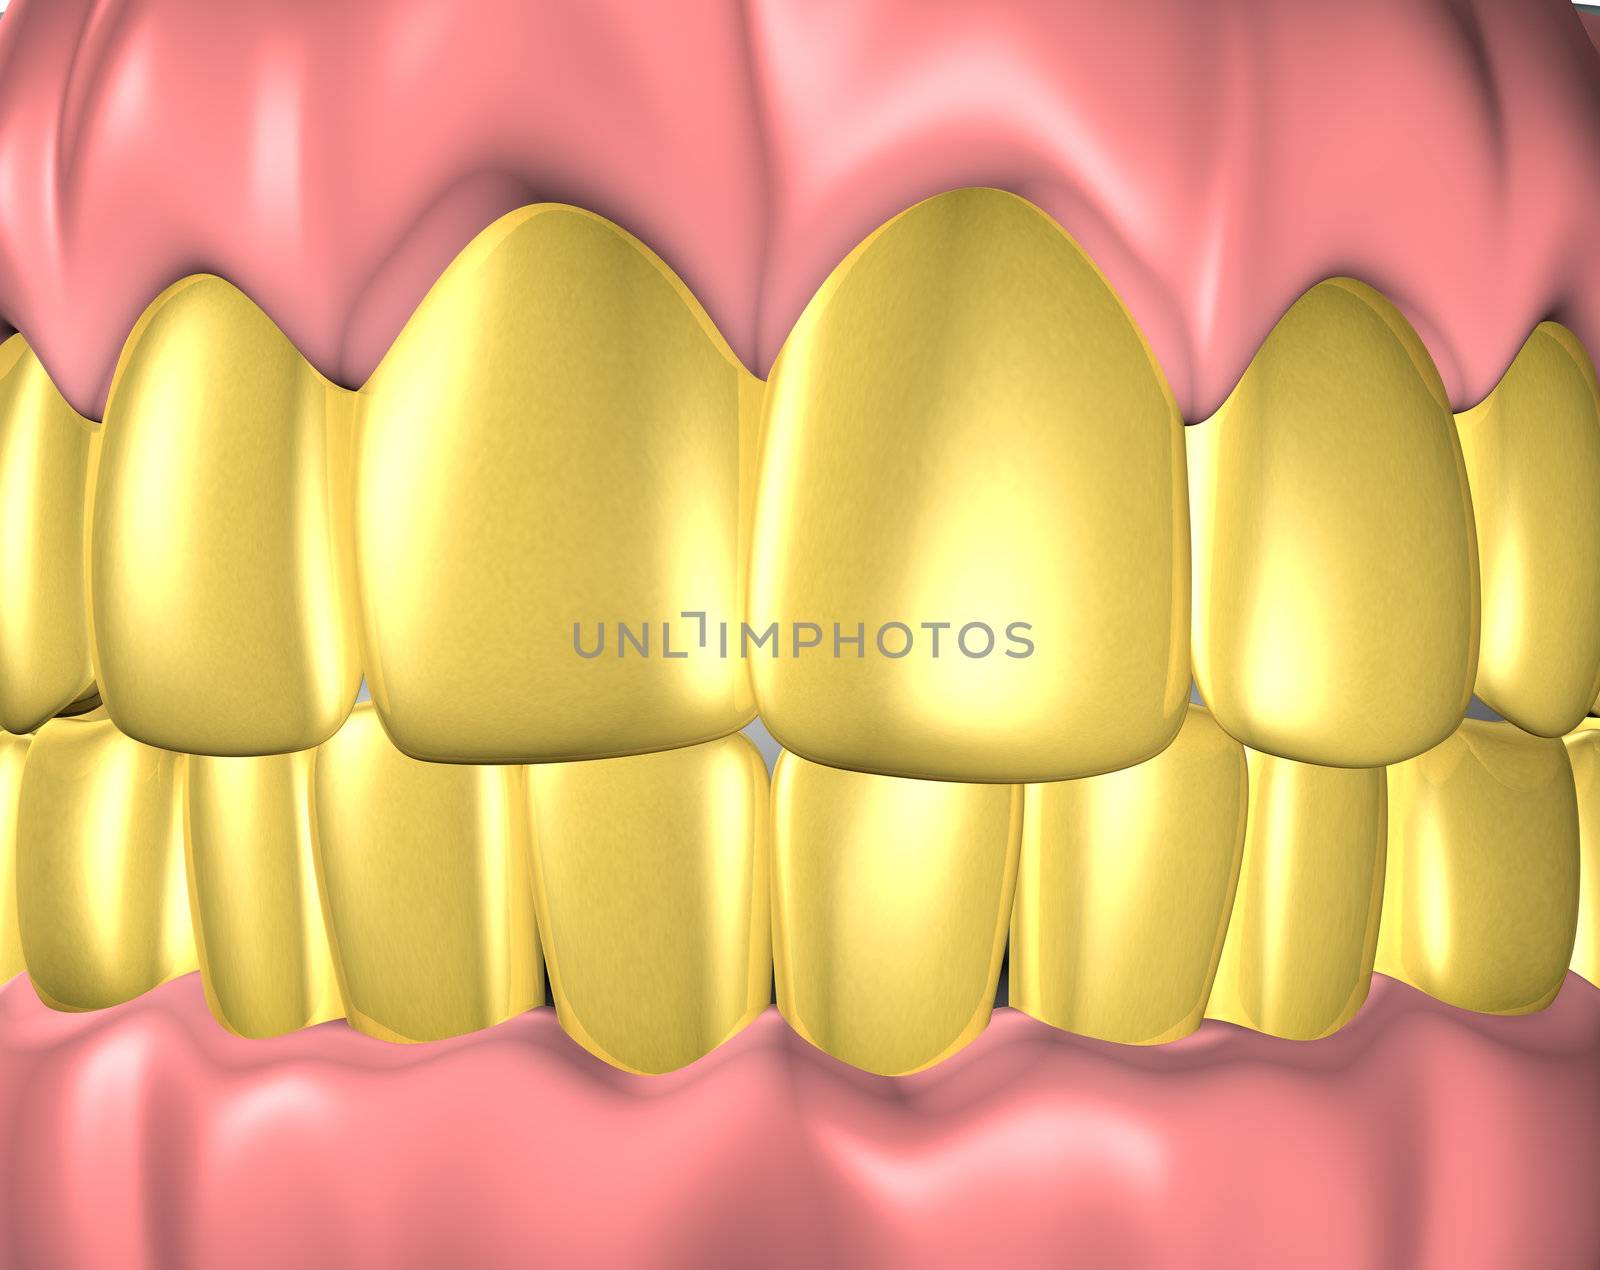 3d image of teeth with gold teeth